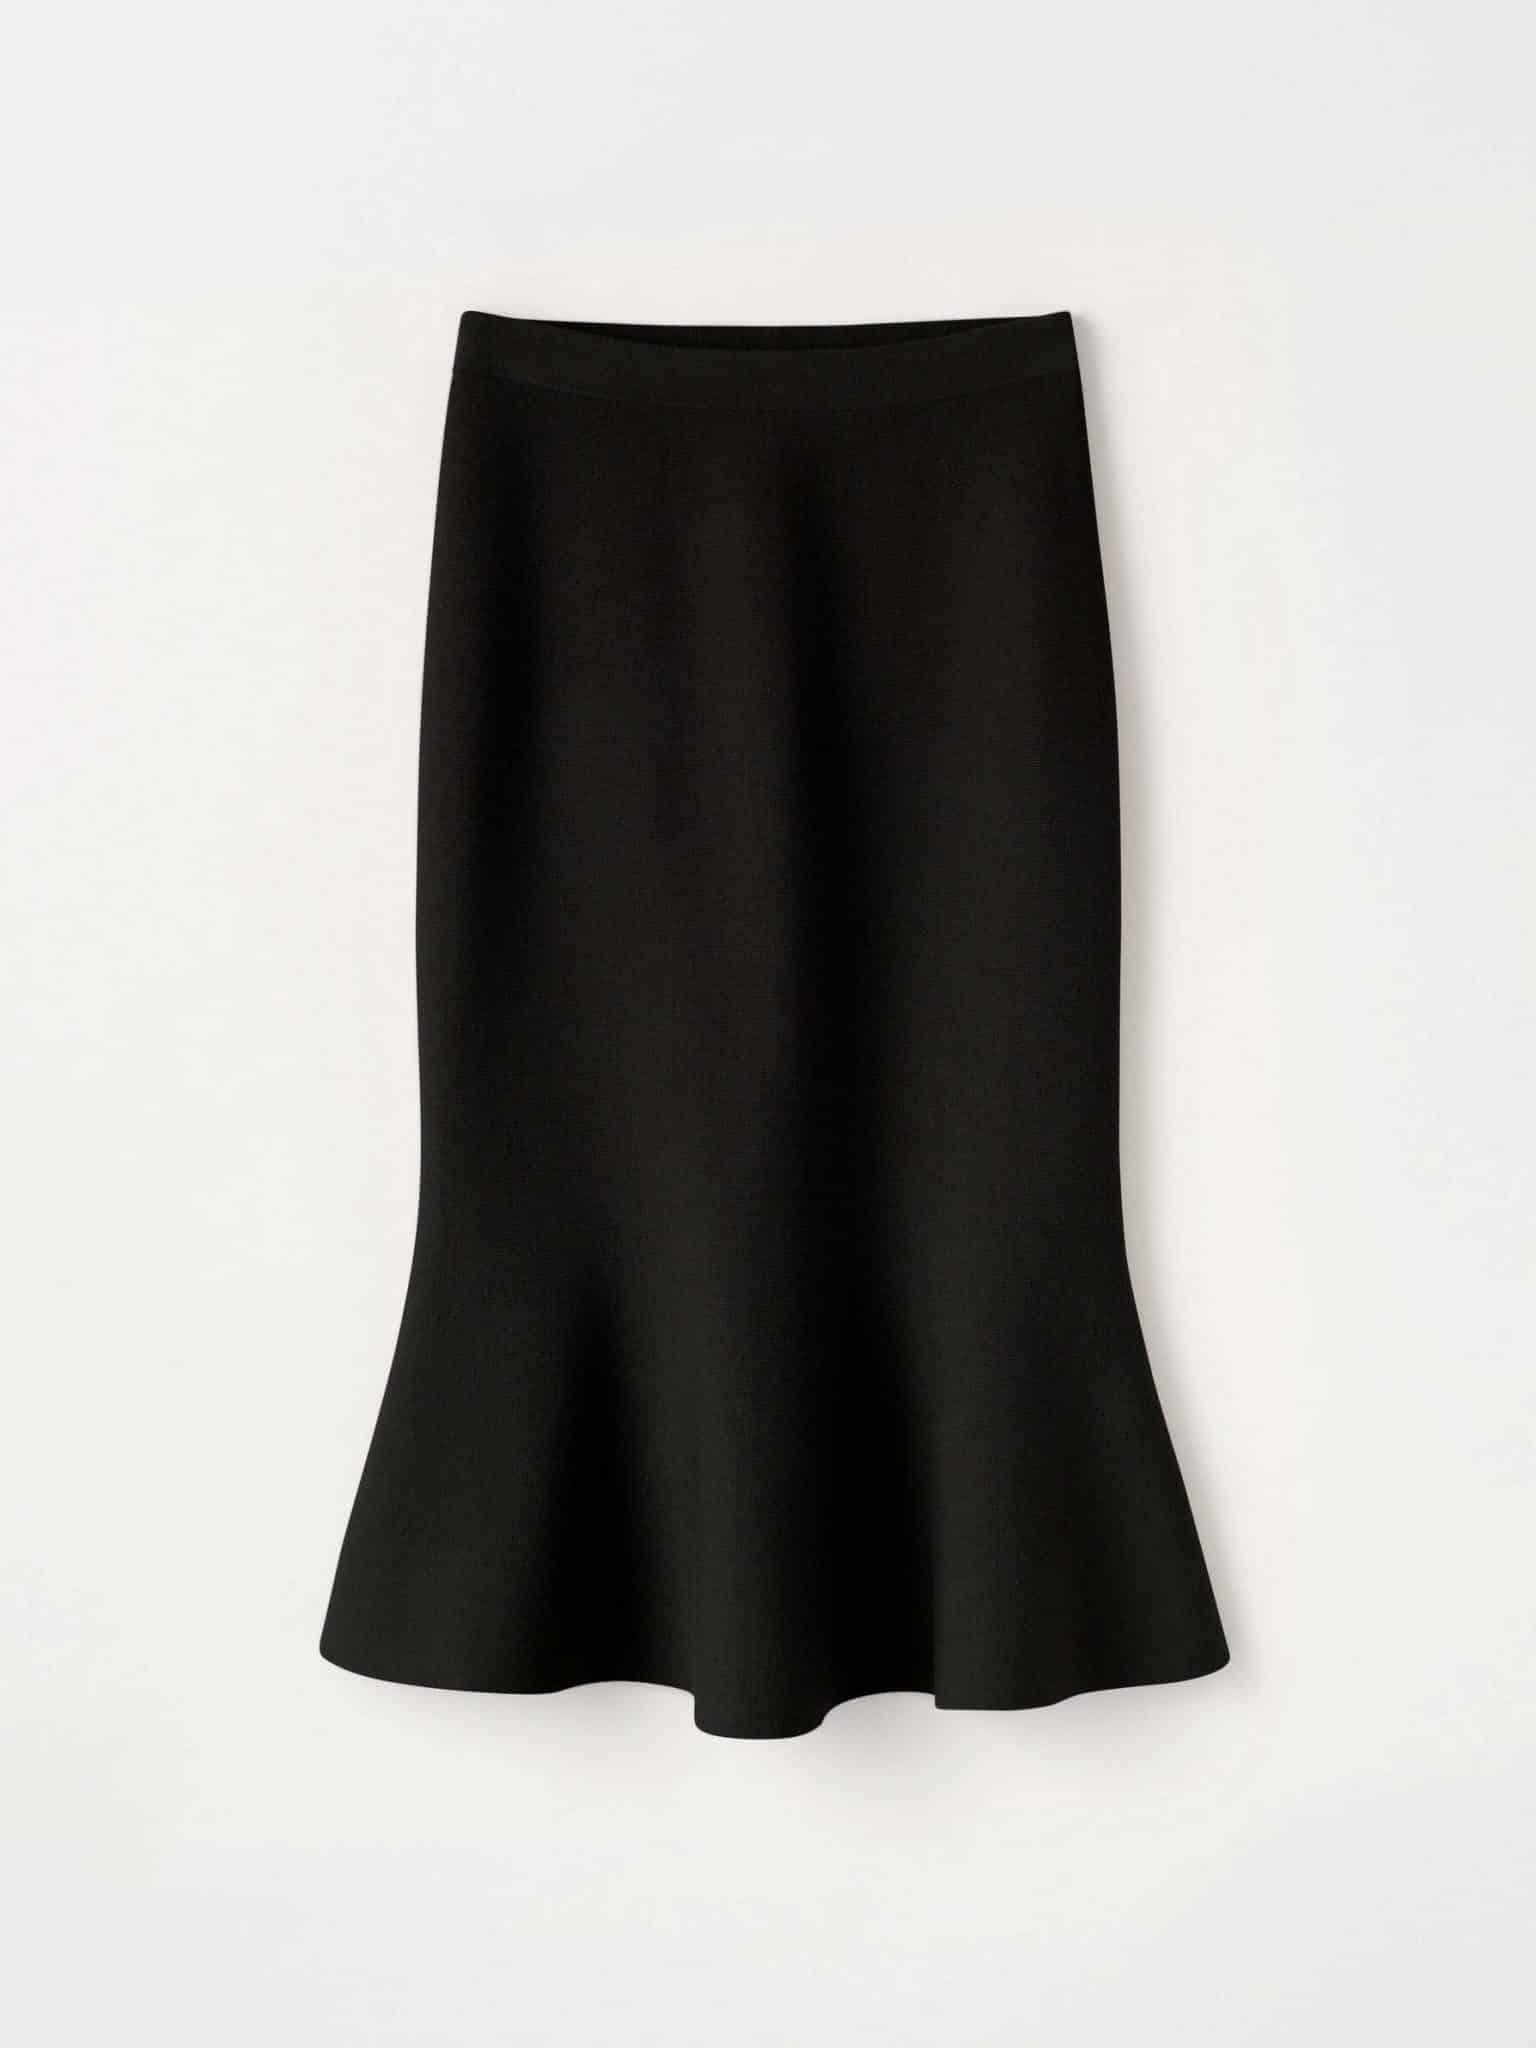 Buy Tiger of Sweden Junee Skirt Black - Scandinavian Fashion Store